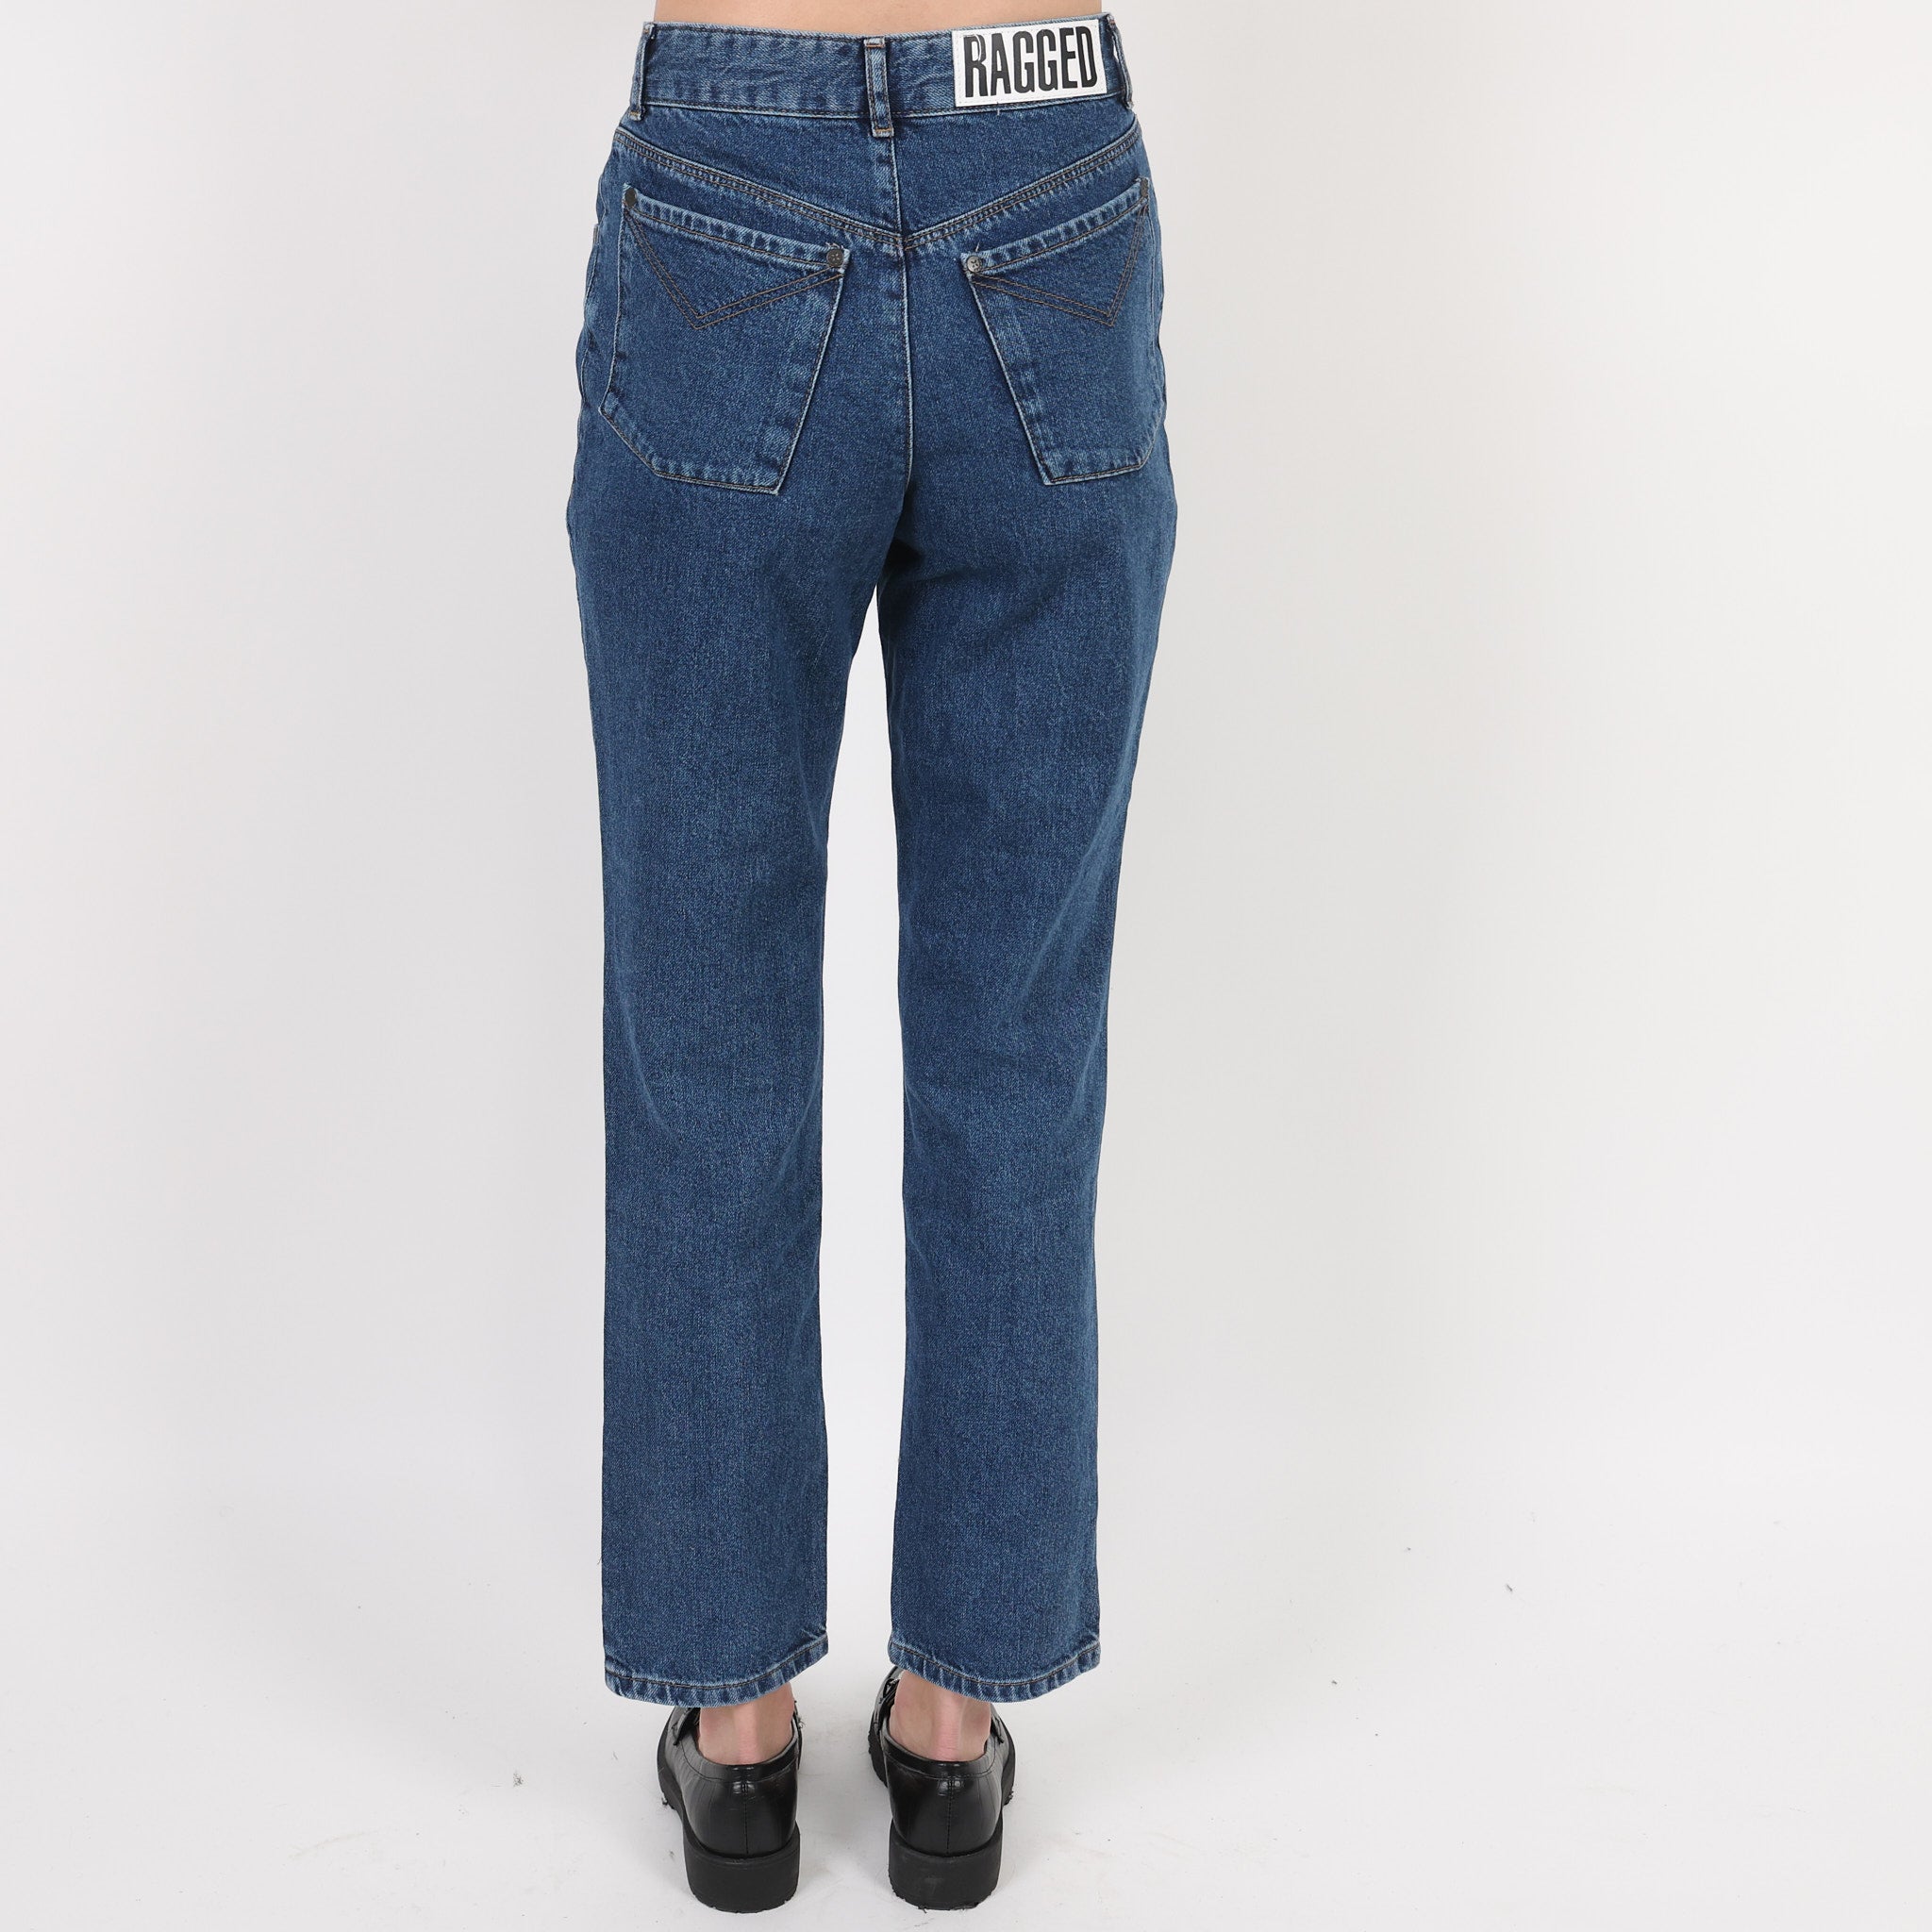 Jeans, Waist 28